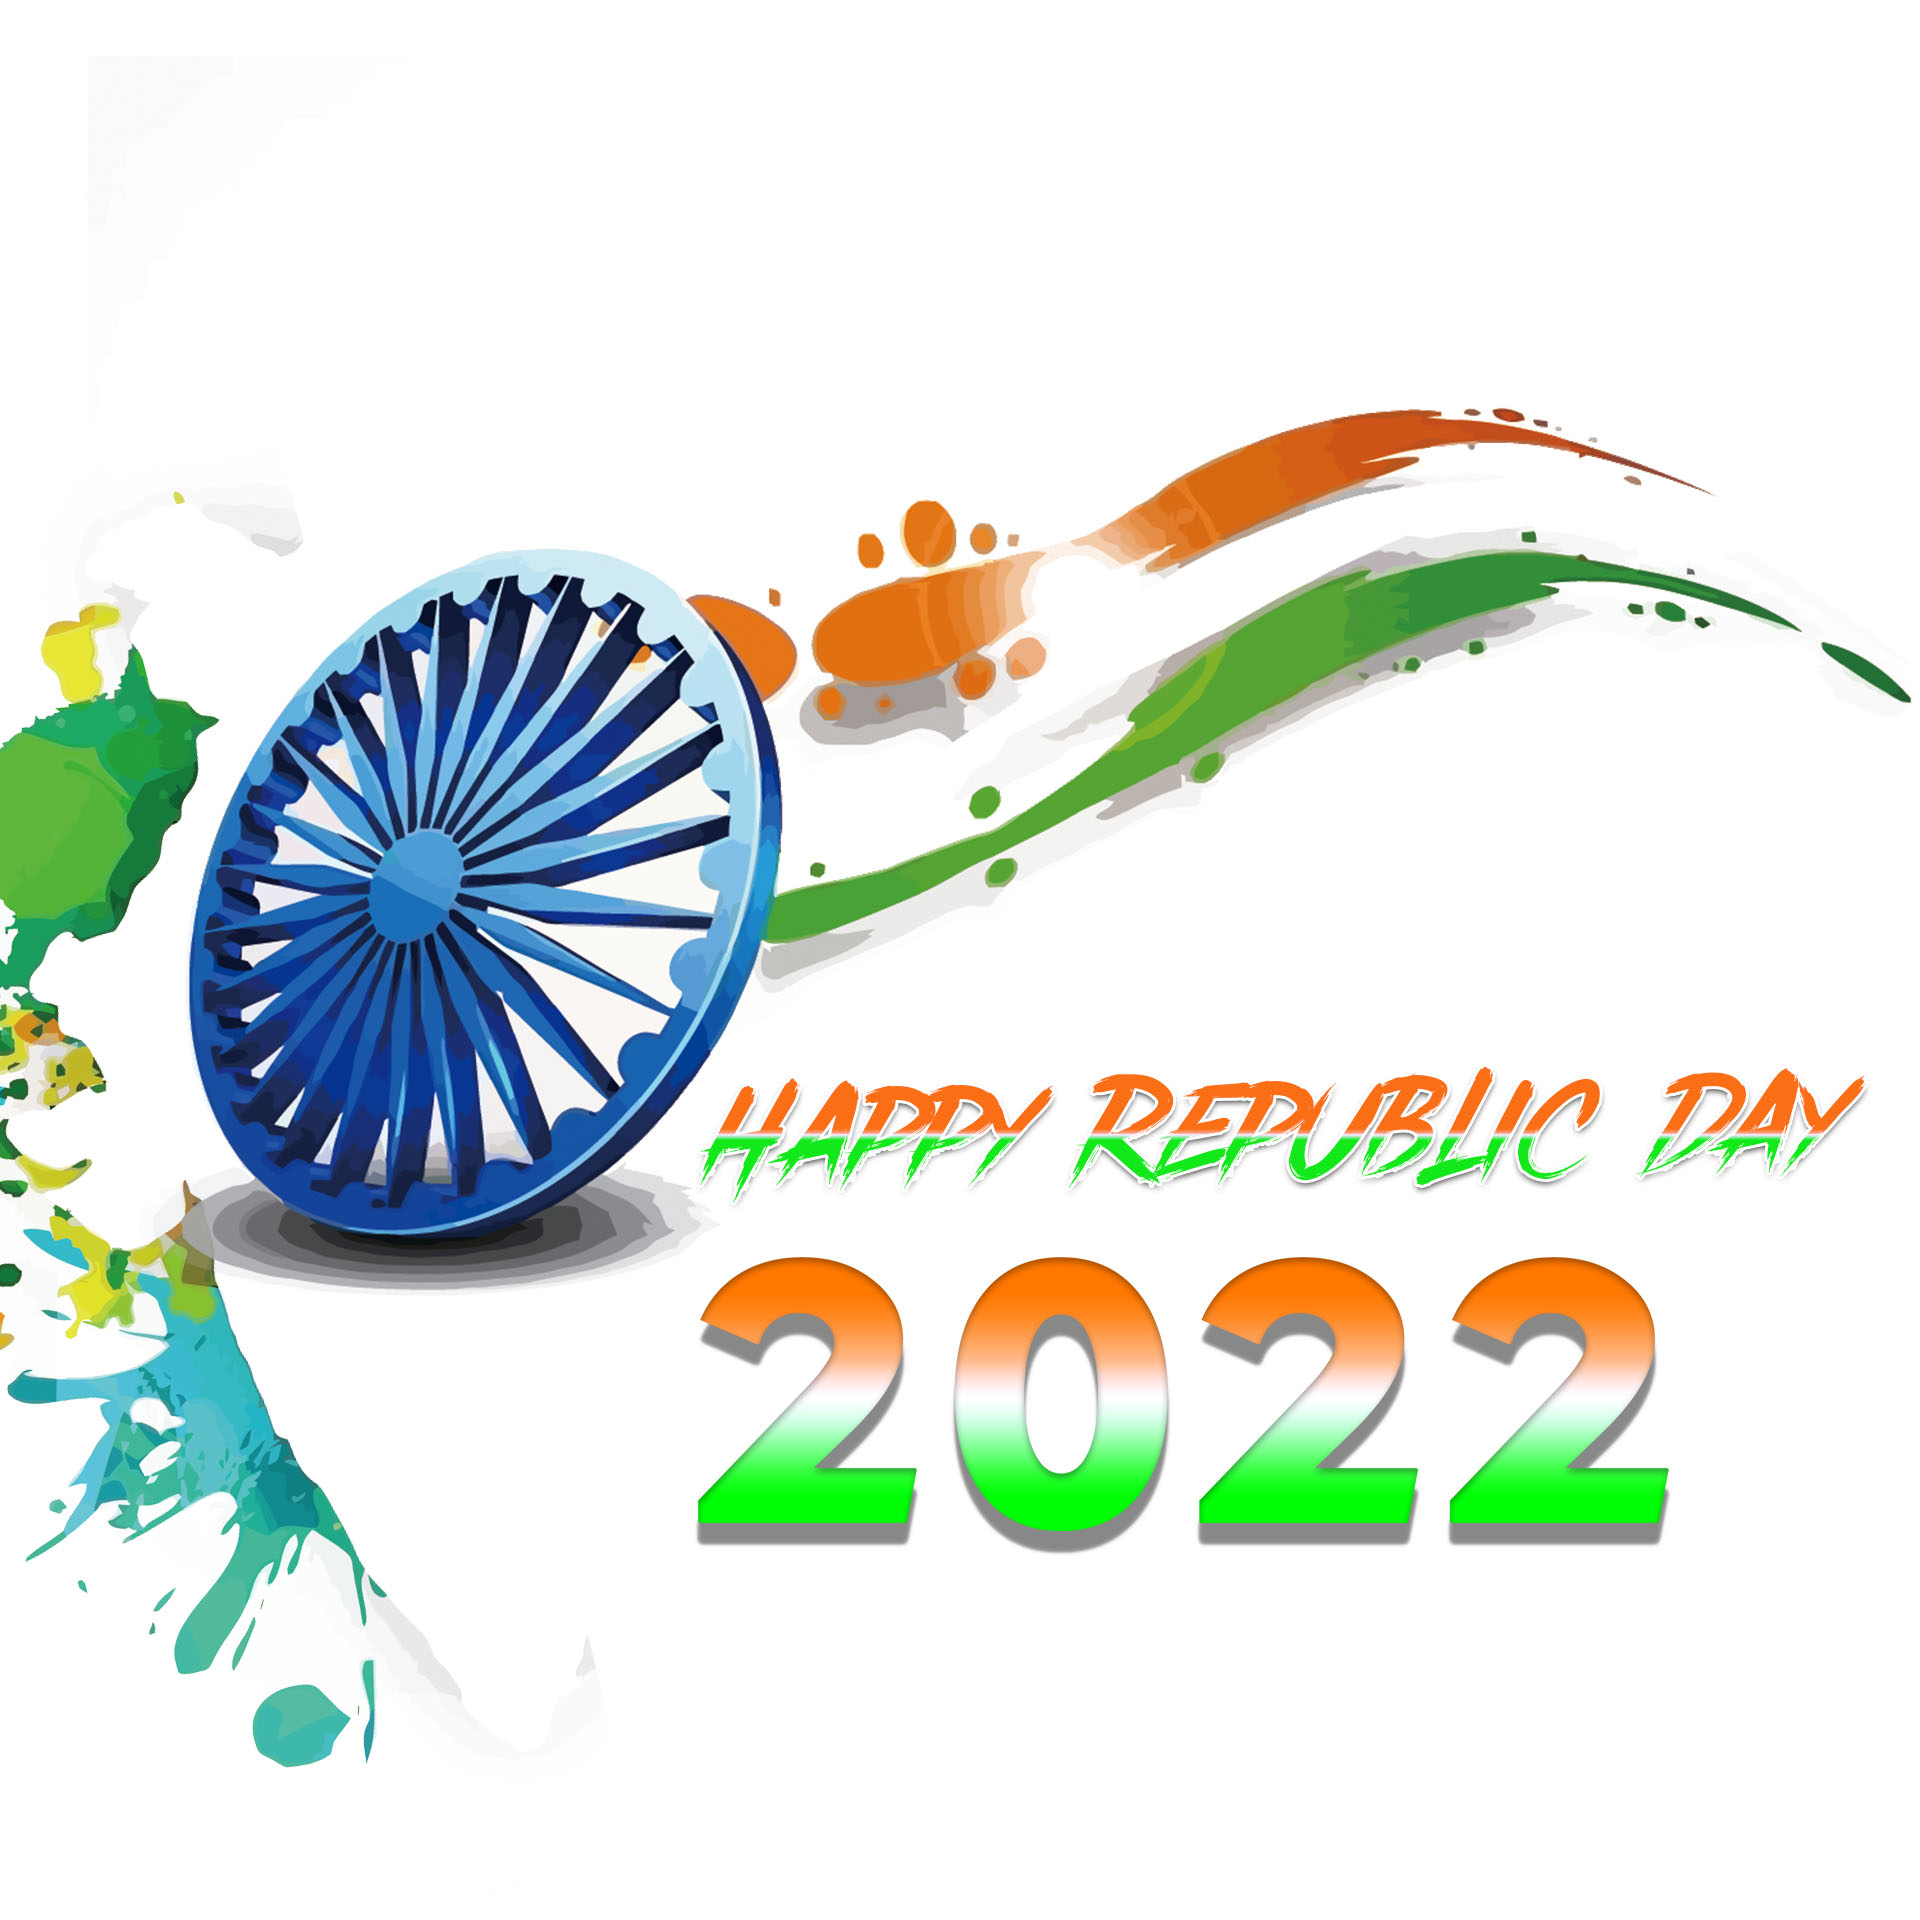 Happy Republic Day 2022 Image Download